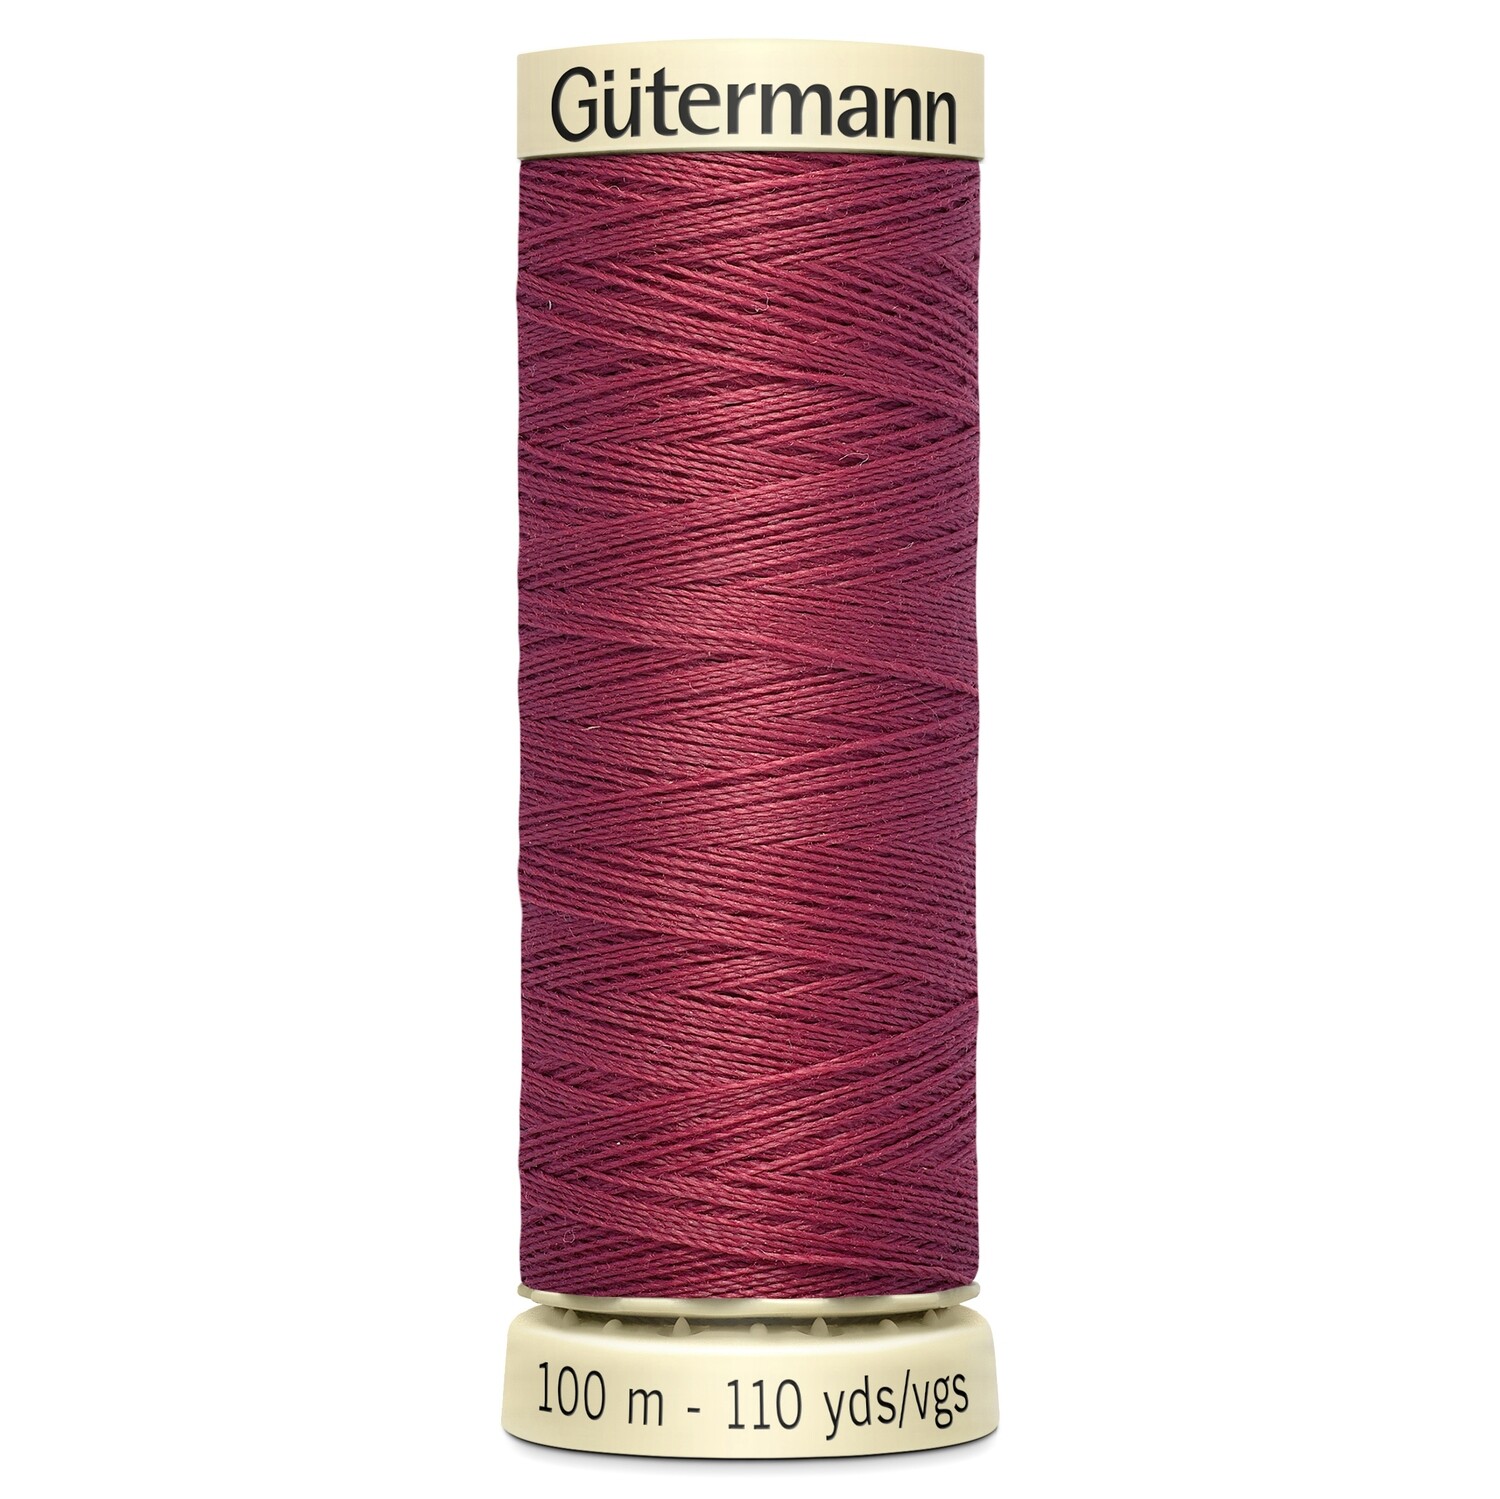 Gutermann Sew-All thread 730